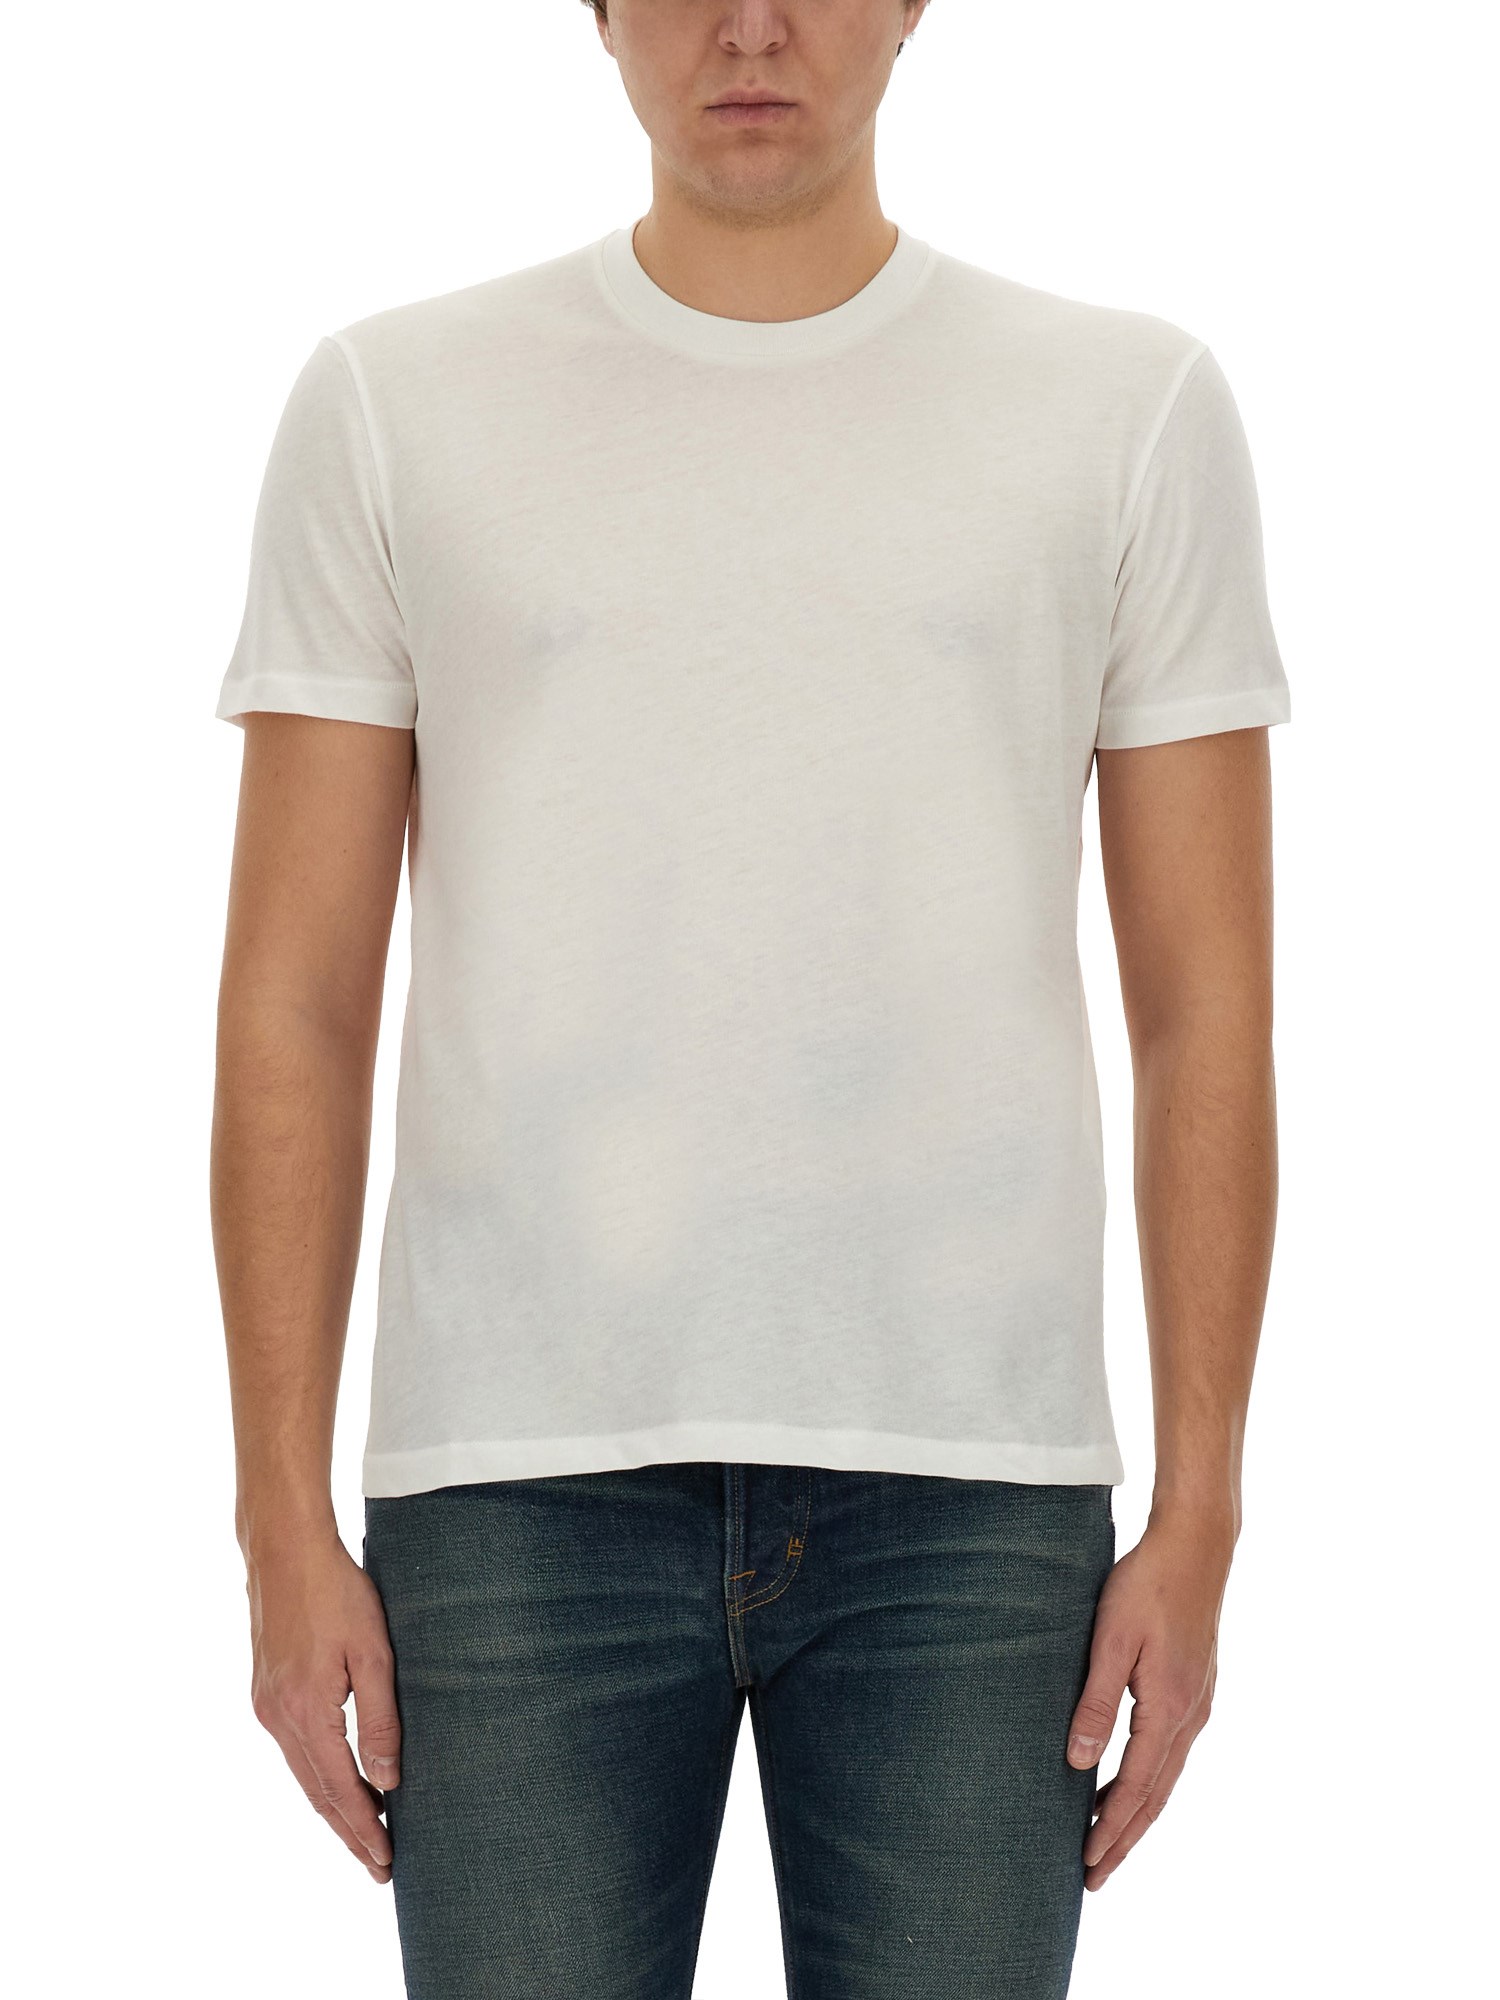 tom ford cotton t-shirt